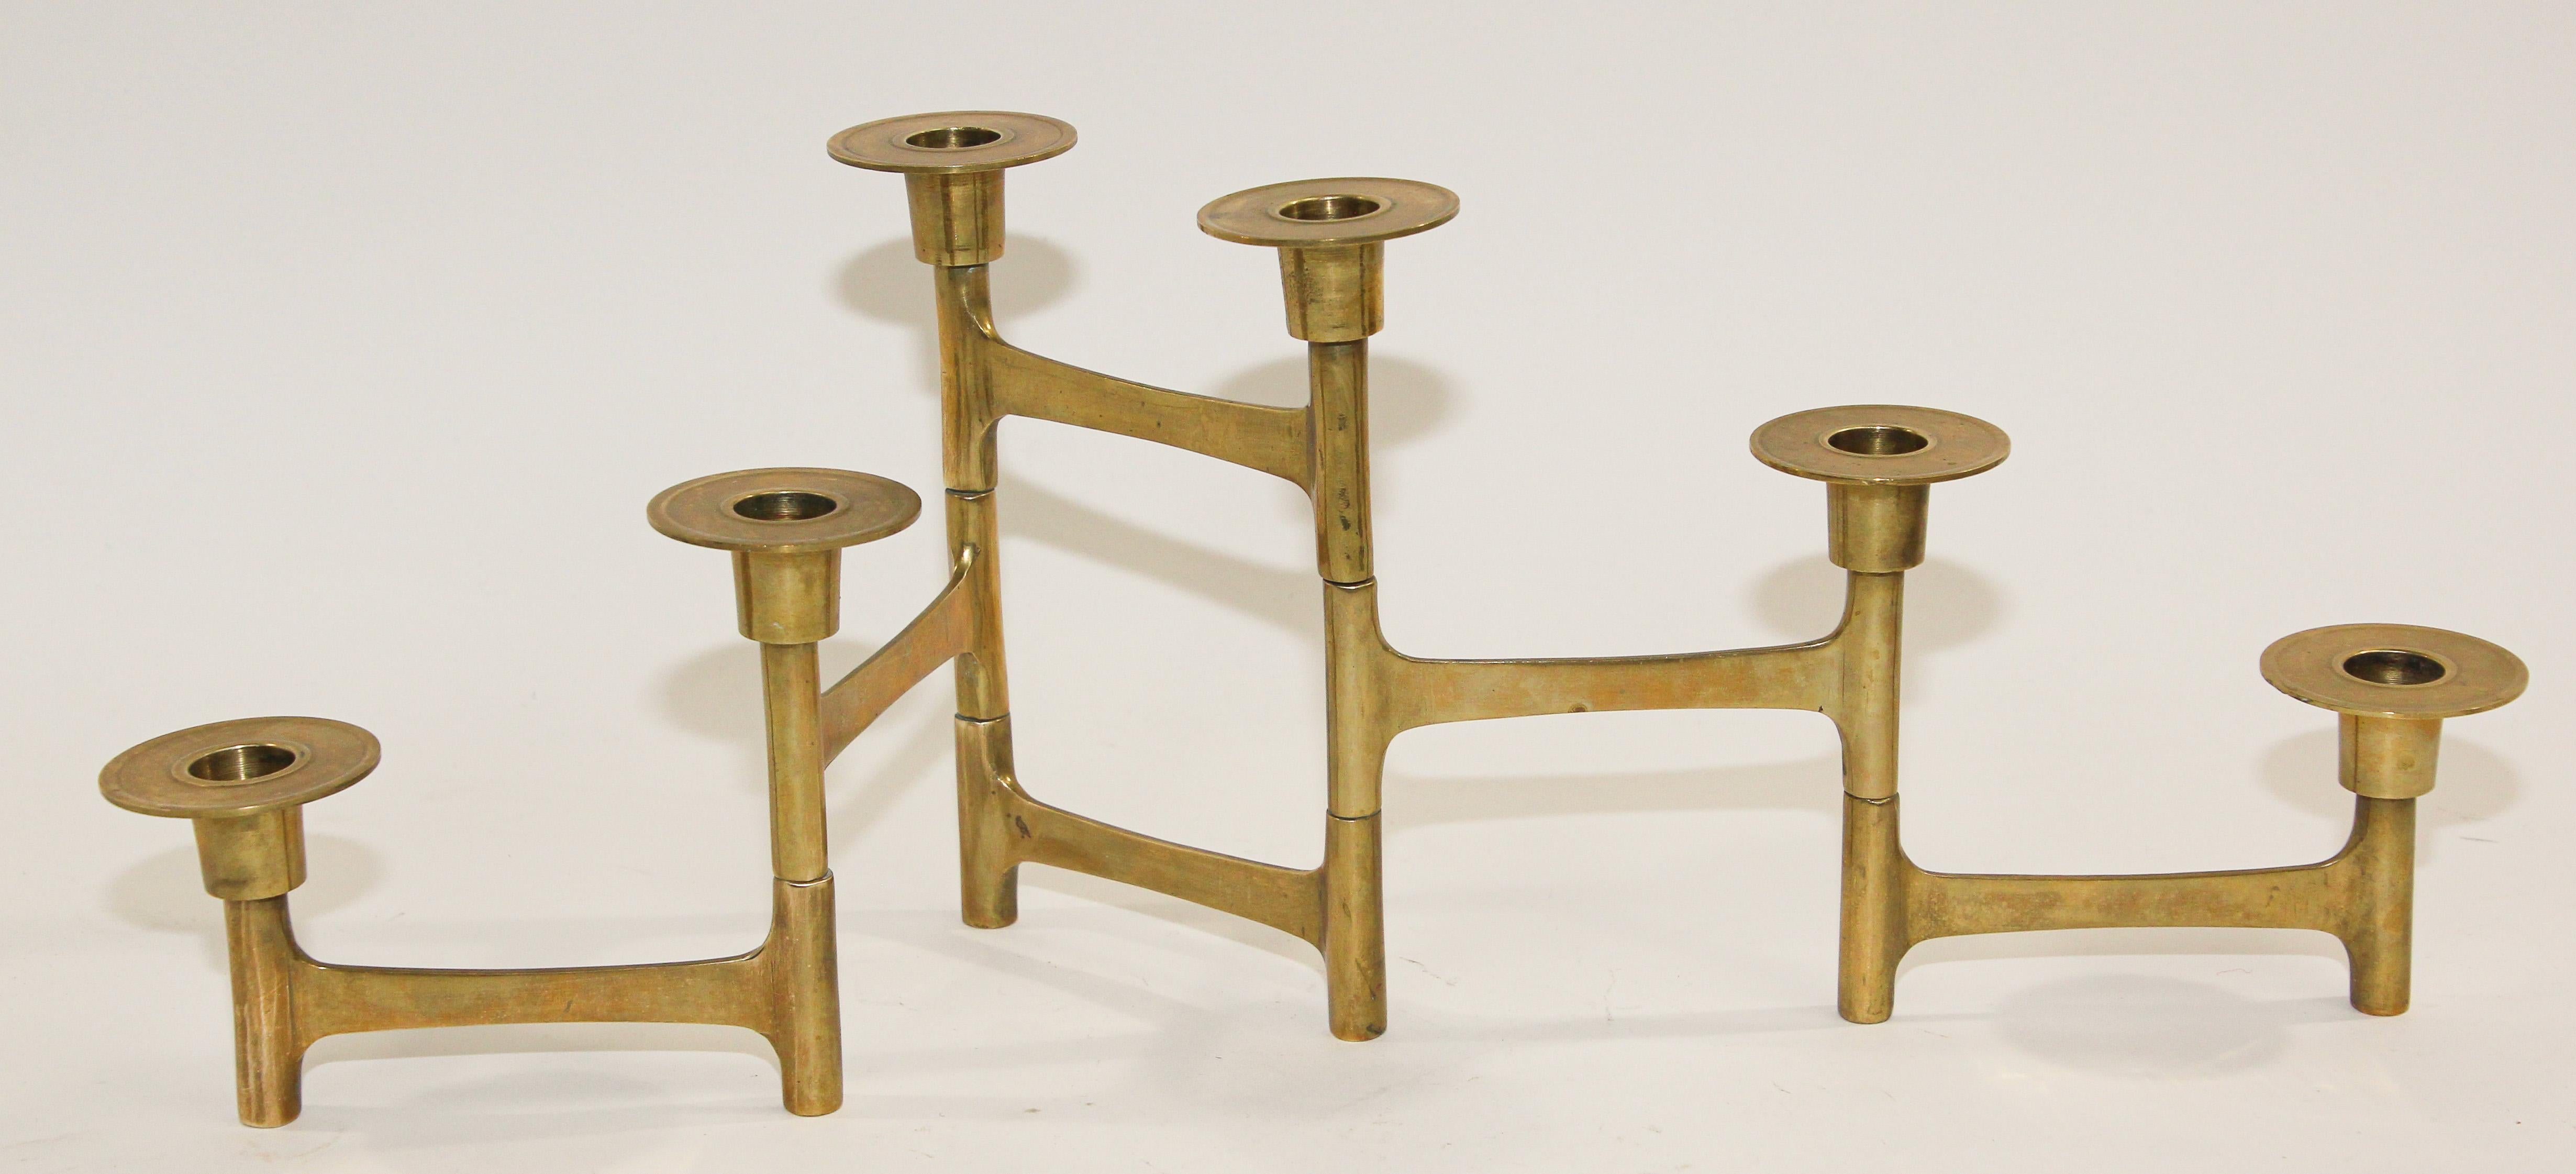 Swedish Danish Mid-Century Modern Brass Articulating Candleholder Nagel Style